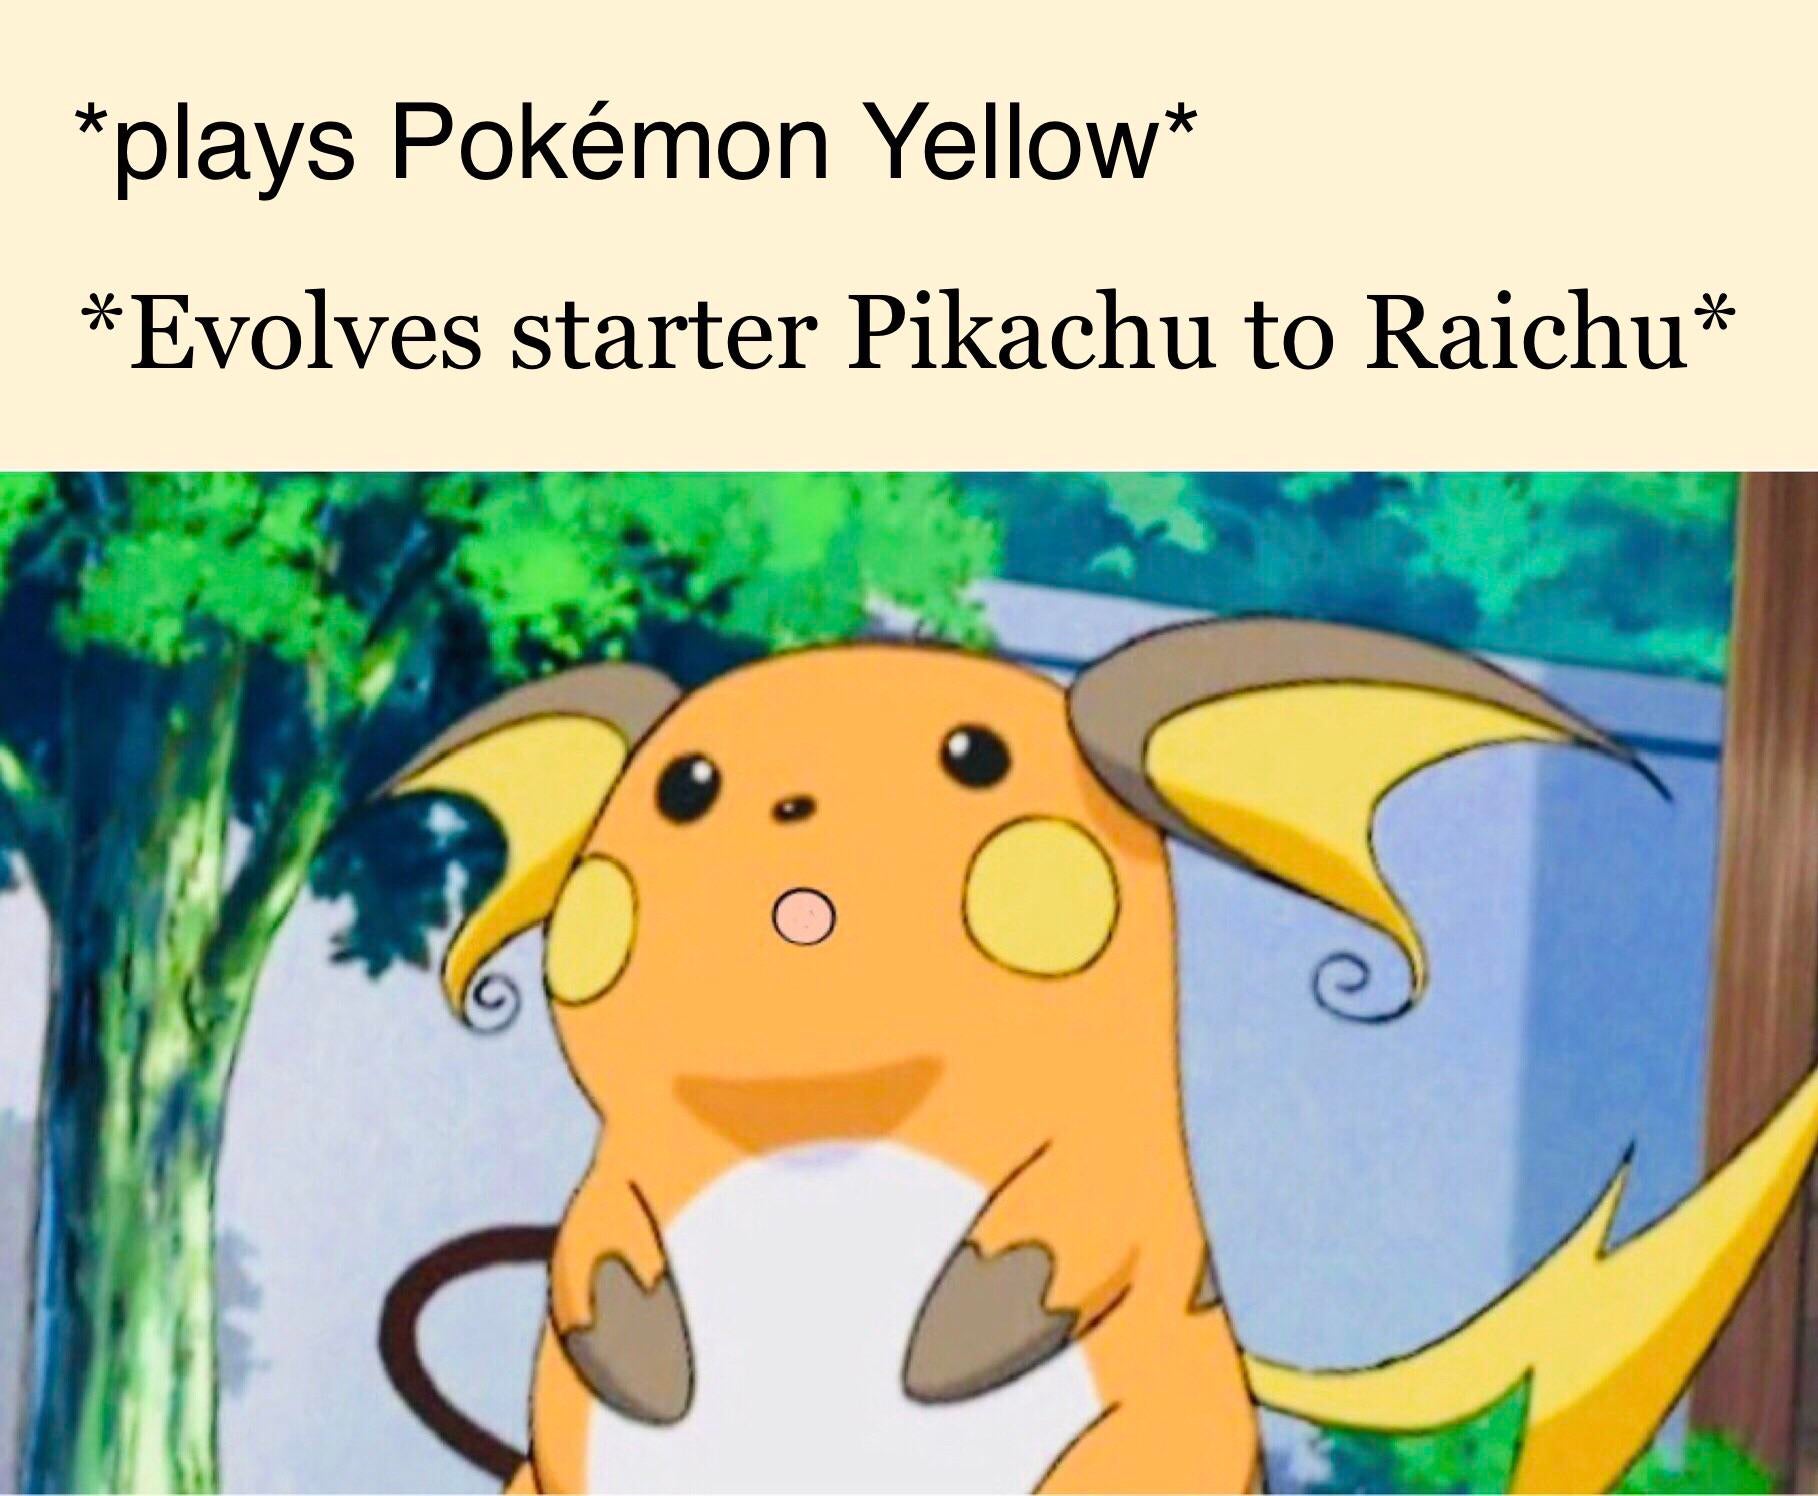 When you evolve Surprised Pikachu into Surprised Raichu ...